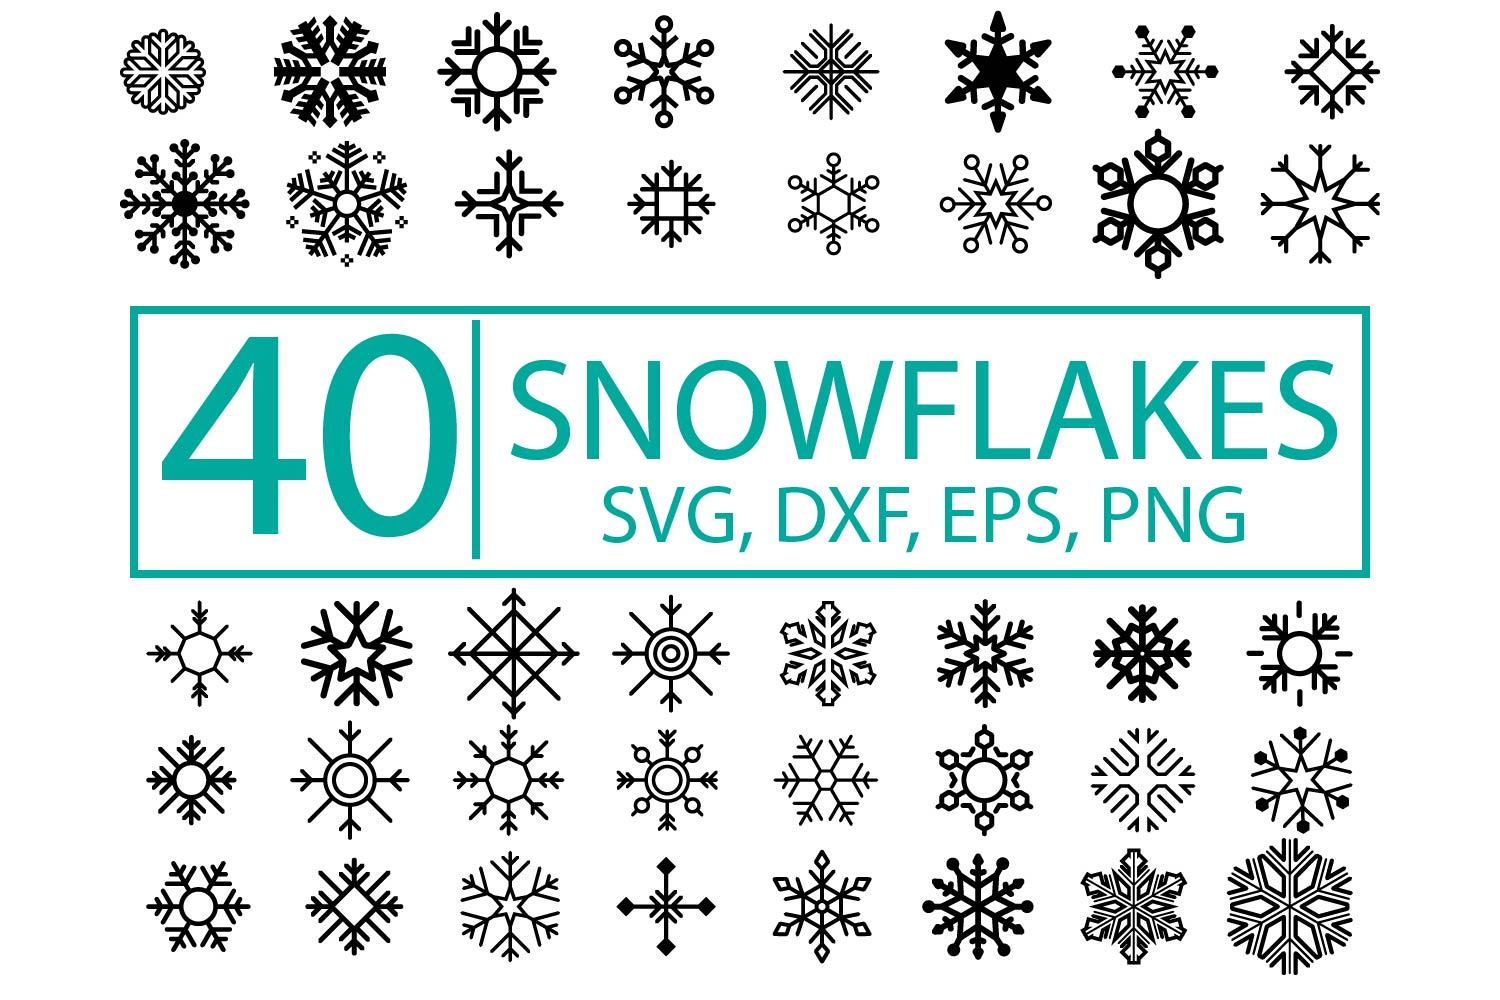 Snowflakes SVG EPS,PNG Instant Zip File Download dxf,jpg Clip Art Art